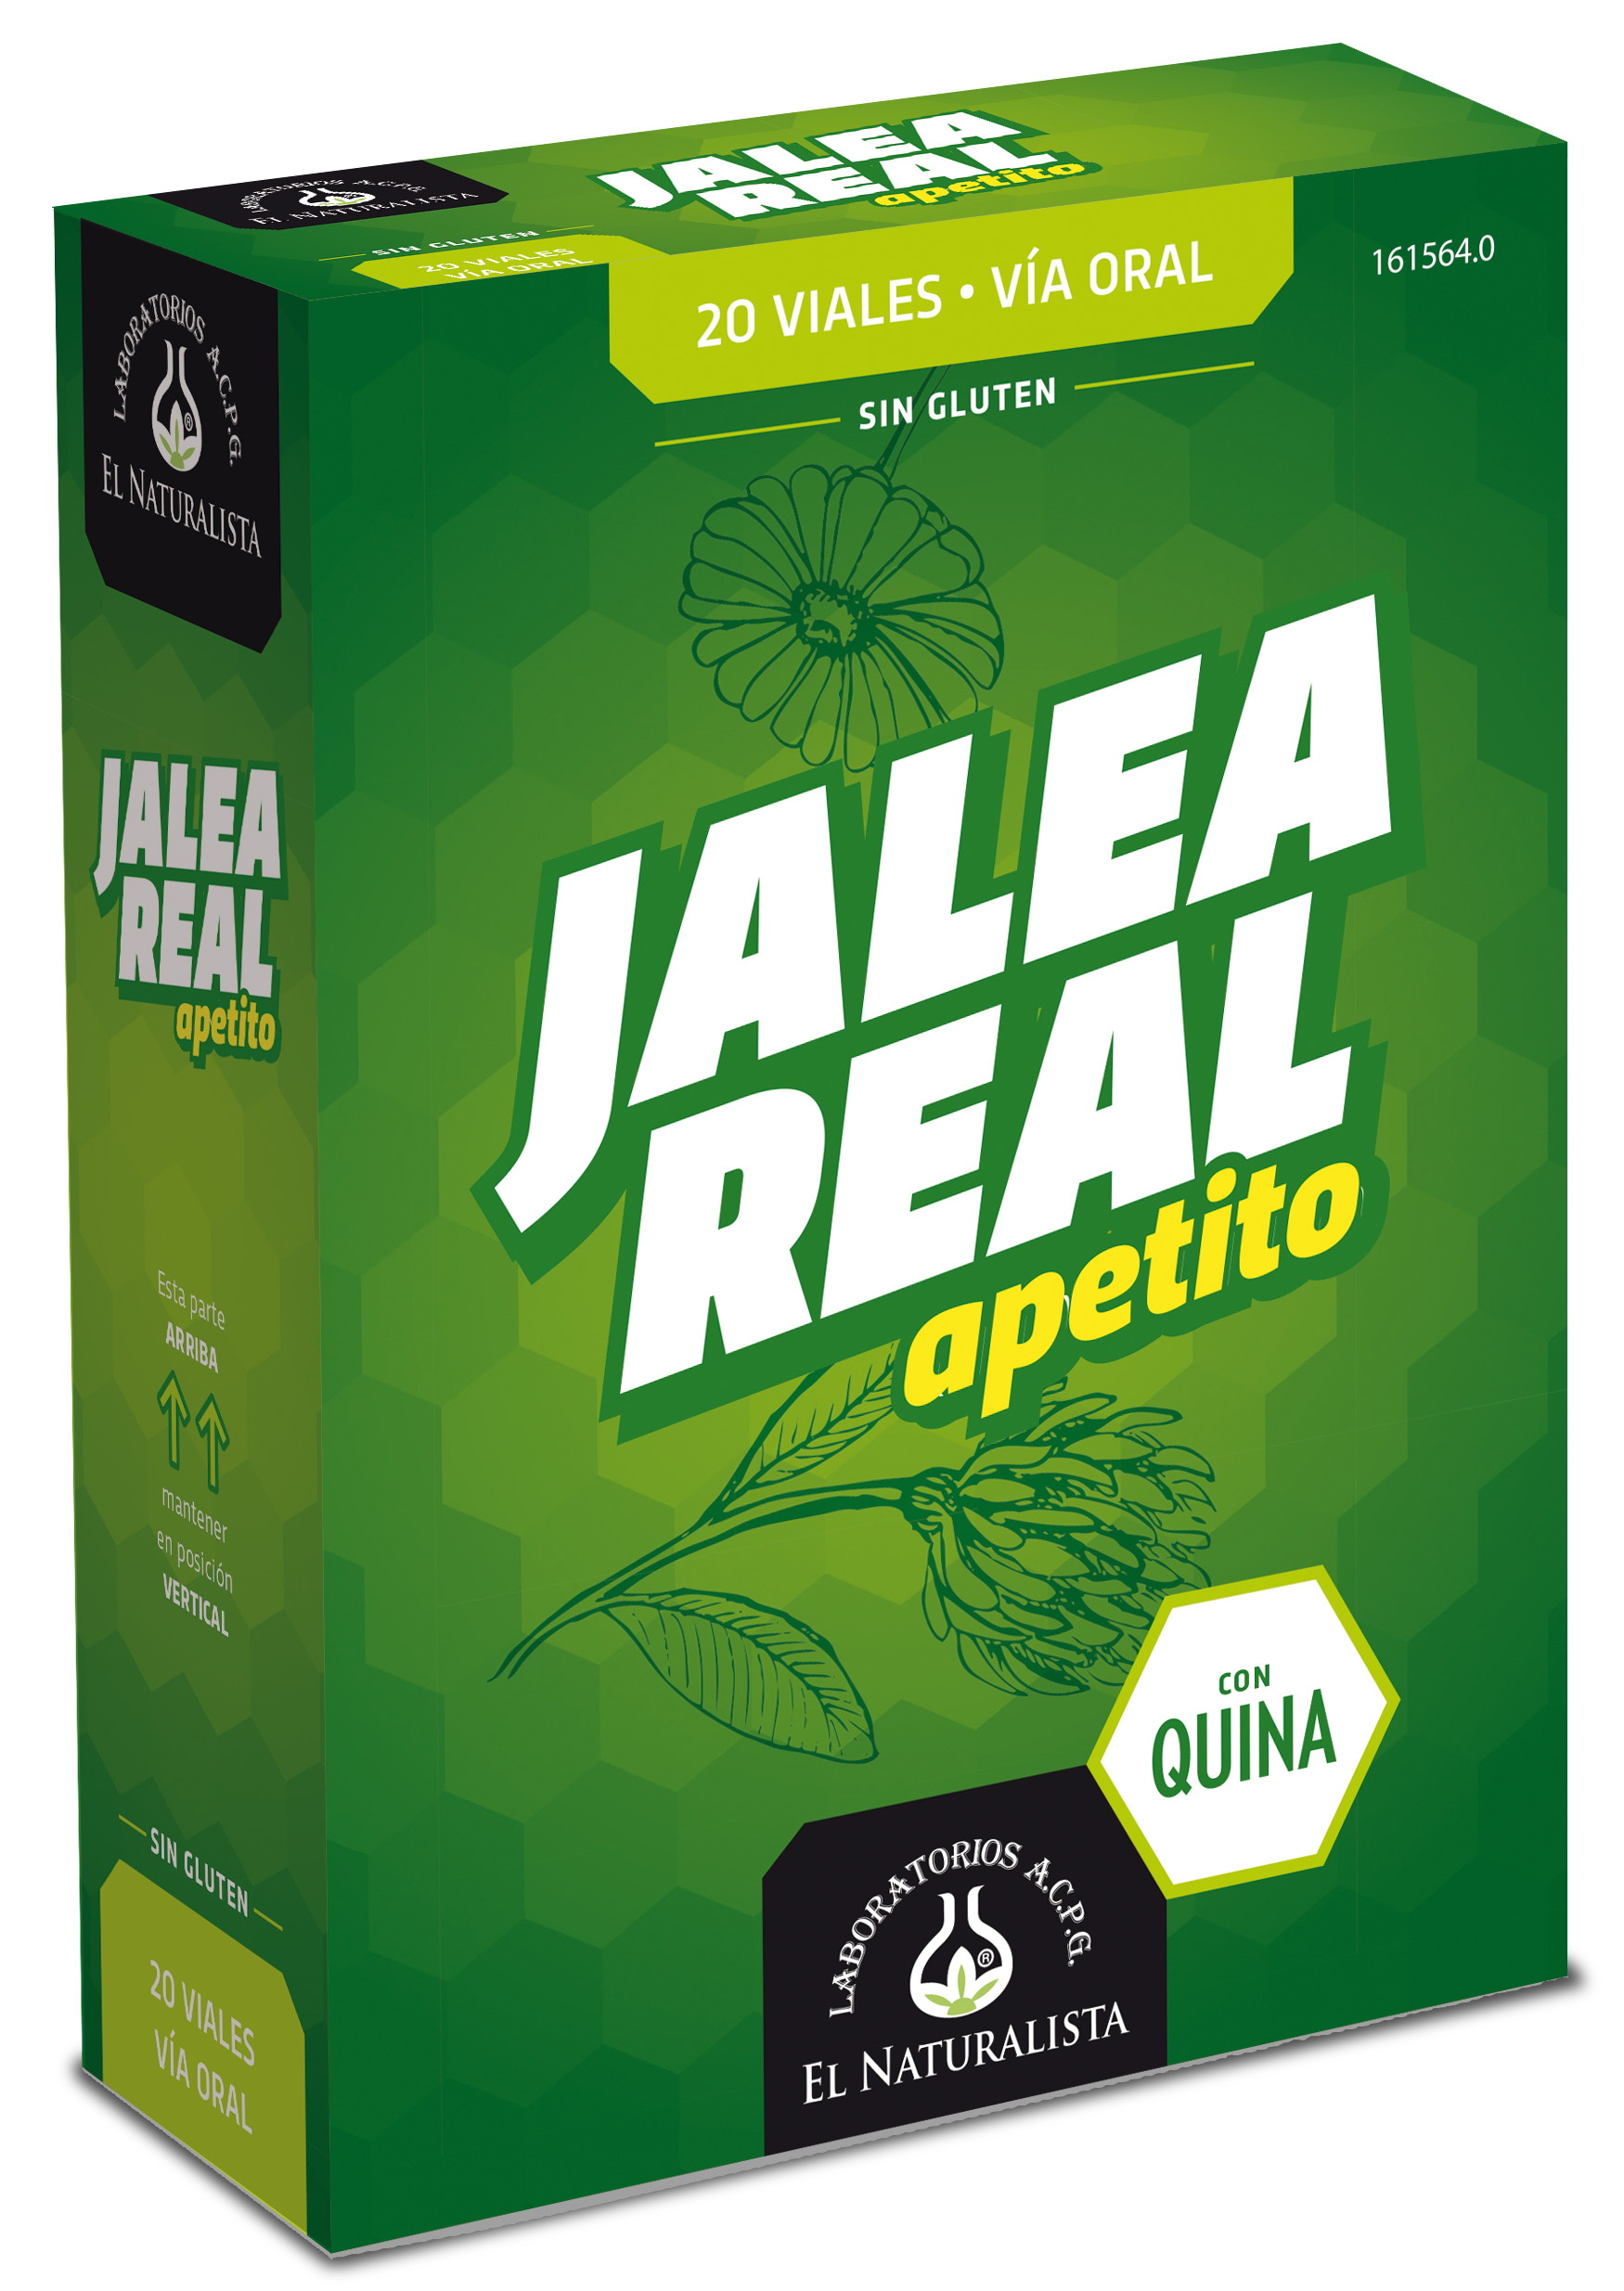 Jalea Real Apetito, 20 viales